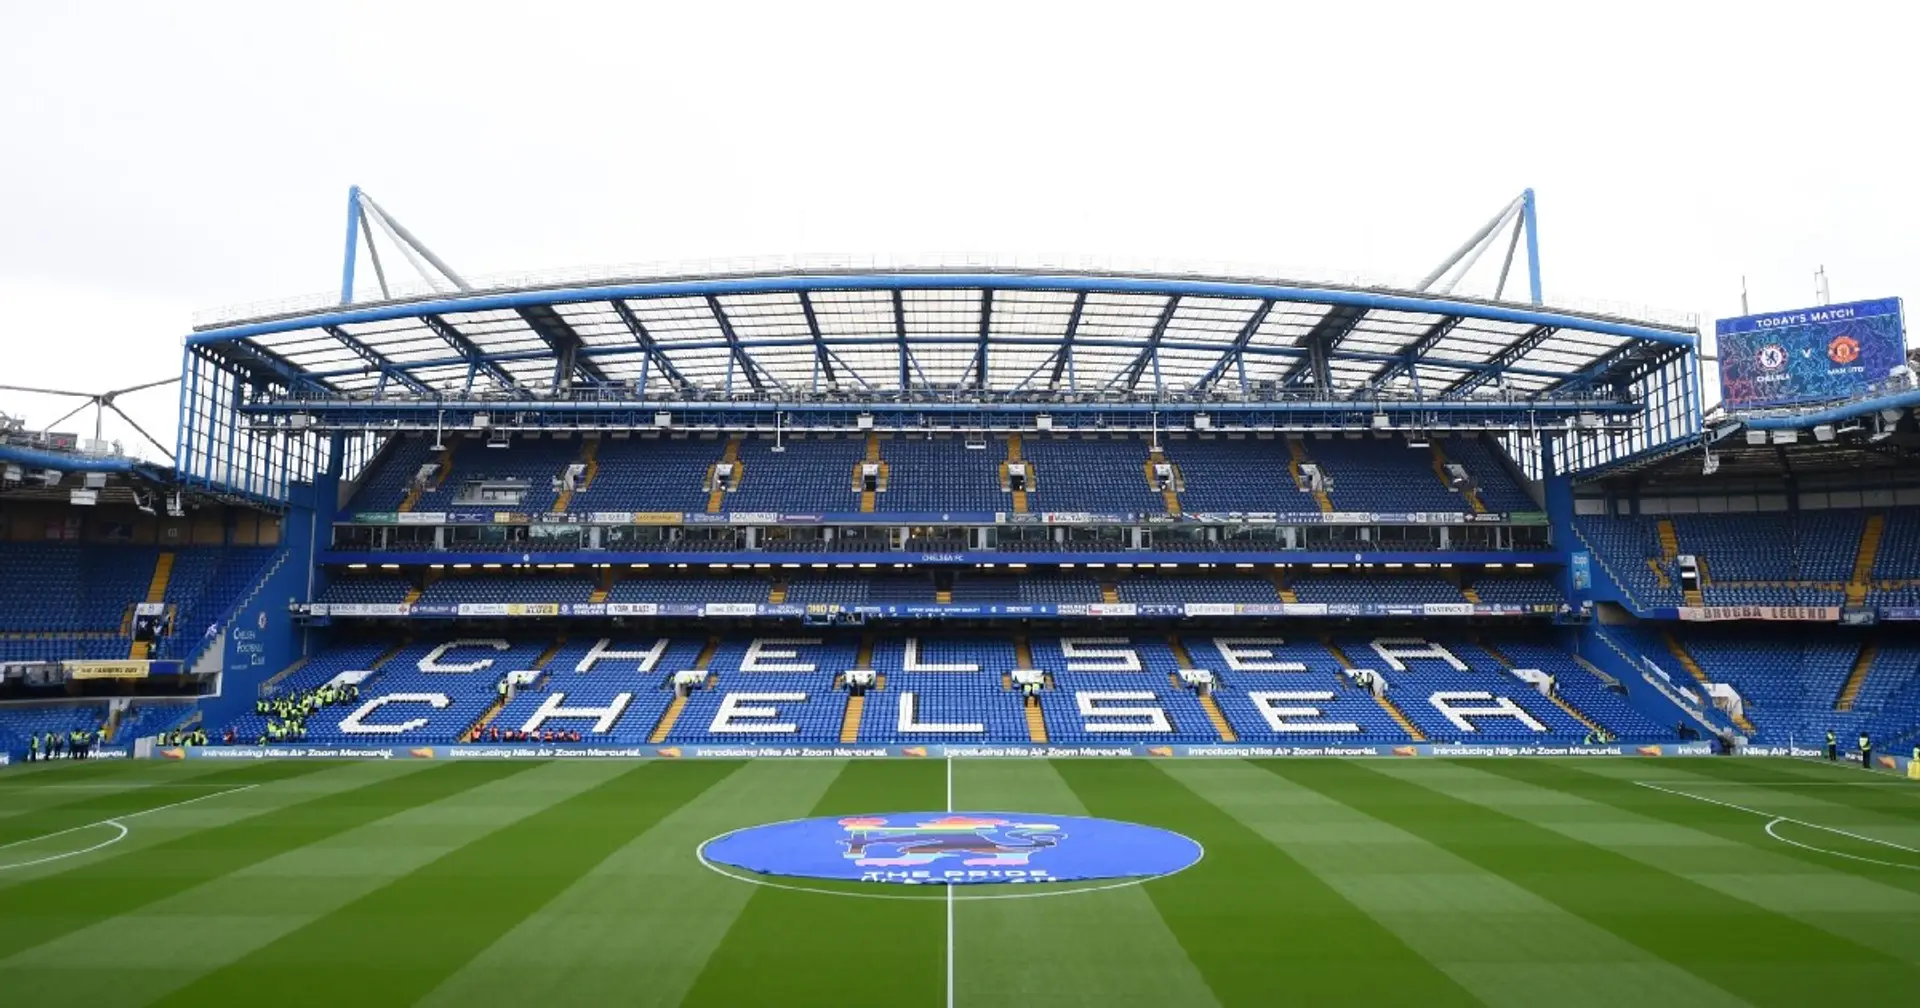 Stay at Stamford Bridge or build new ground? Chelsea's stadium options analysed